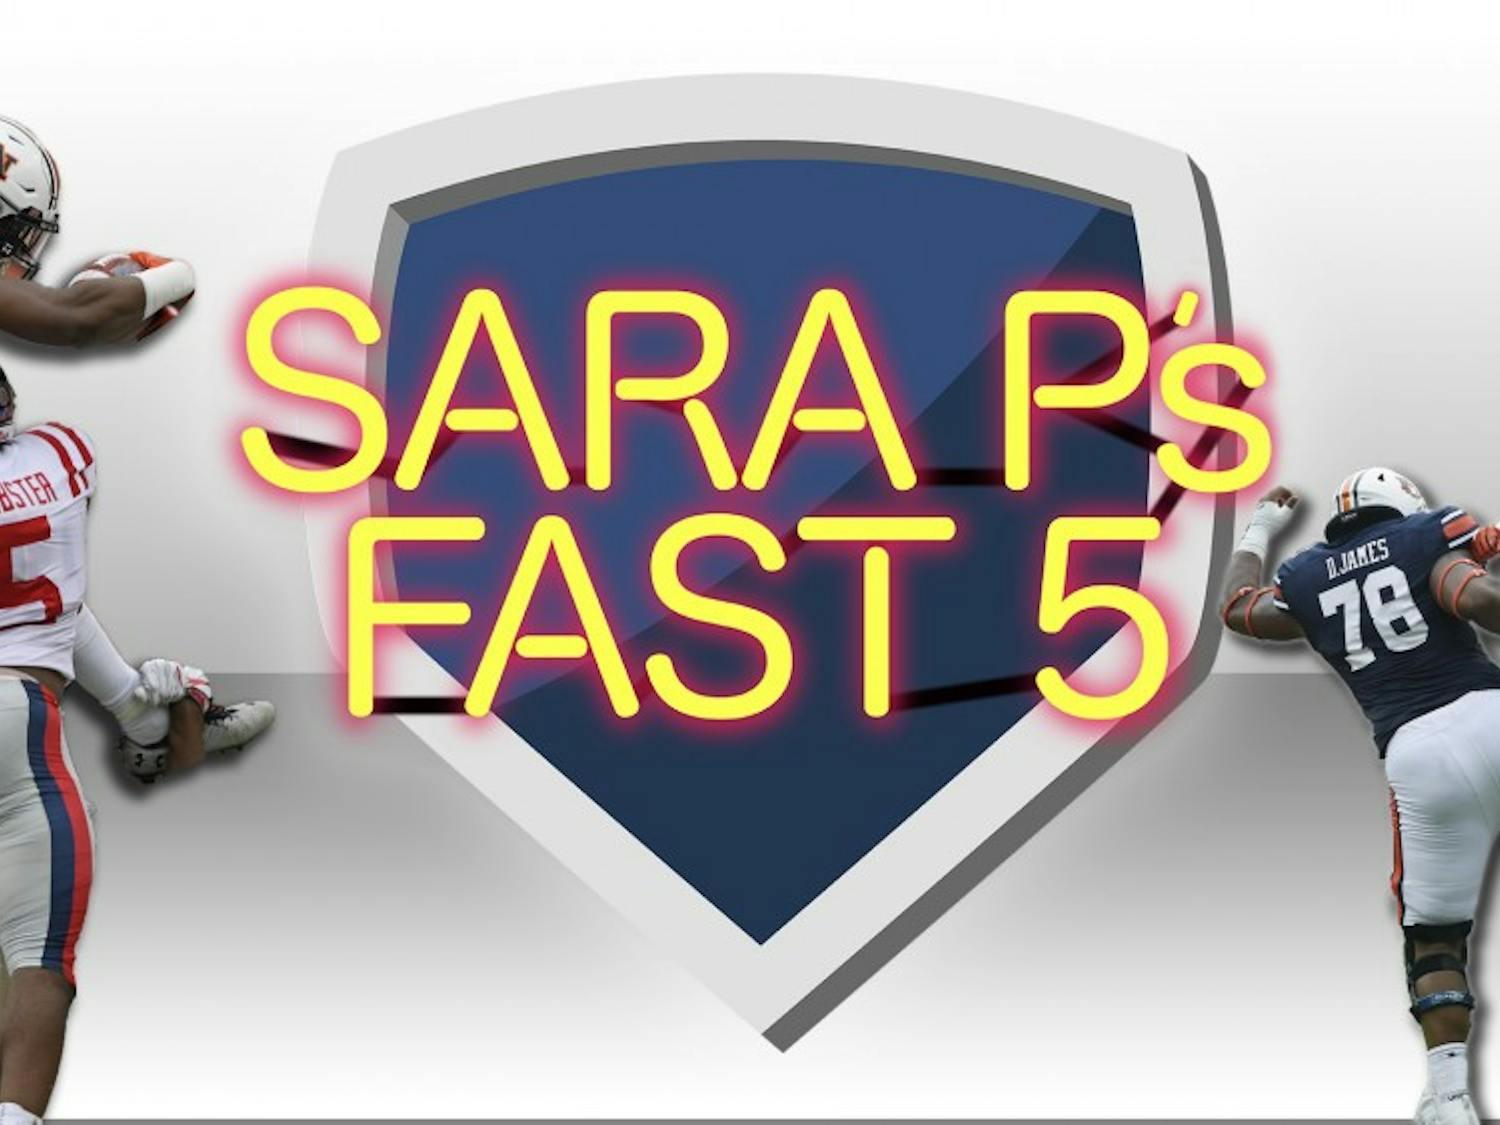 Sara P's Fast 5: Auburn dominates Ole Miss